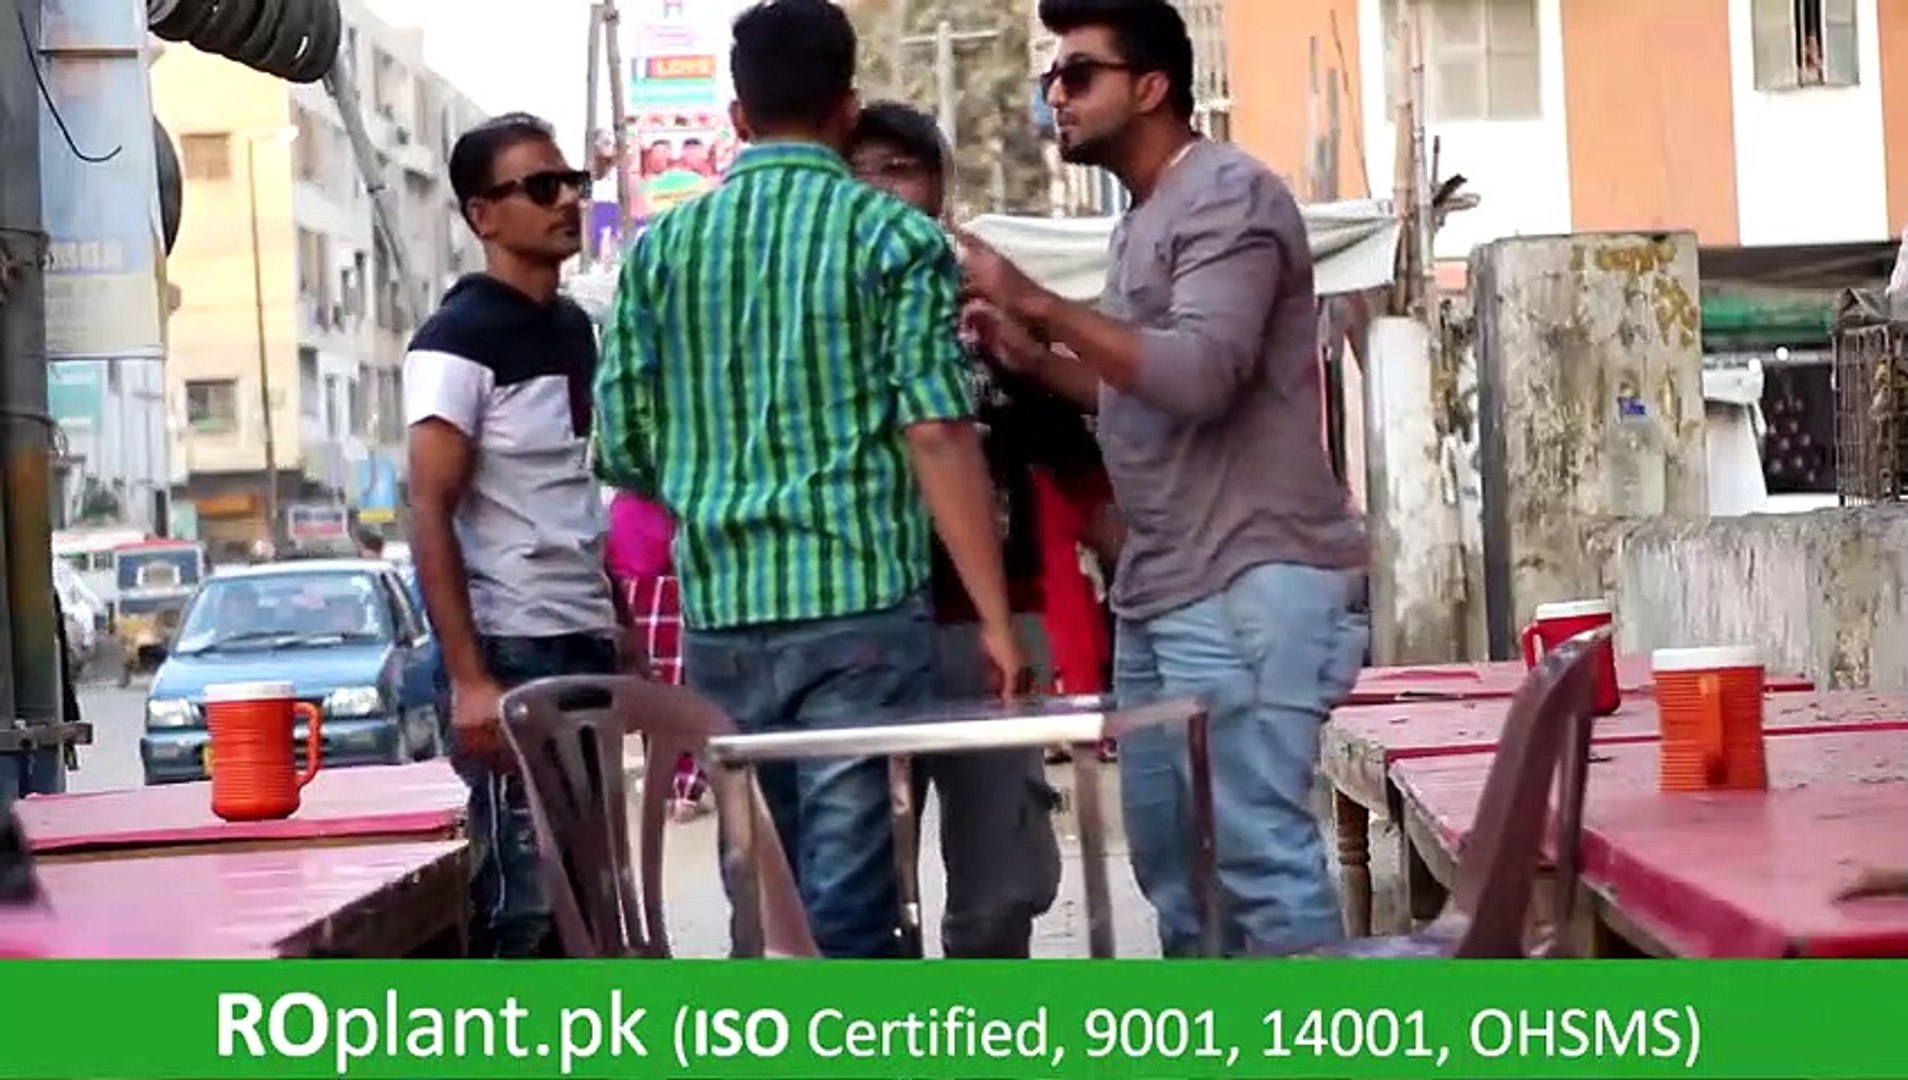 Arm Wrestling Challenge Prank - Pranks In Pakistan - prank by pakistani pranks